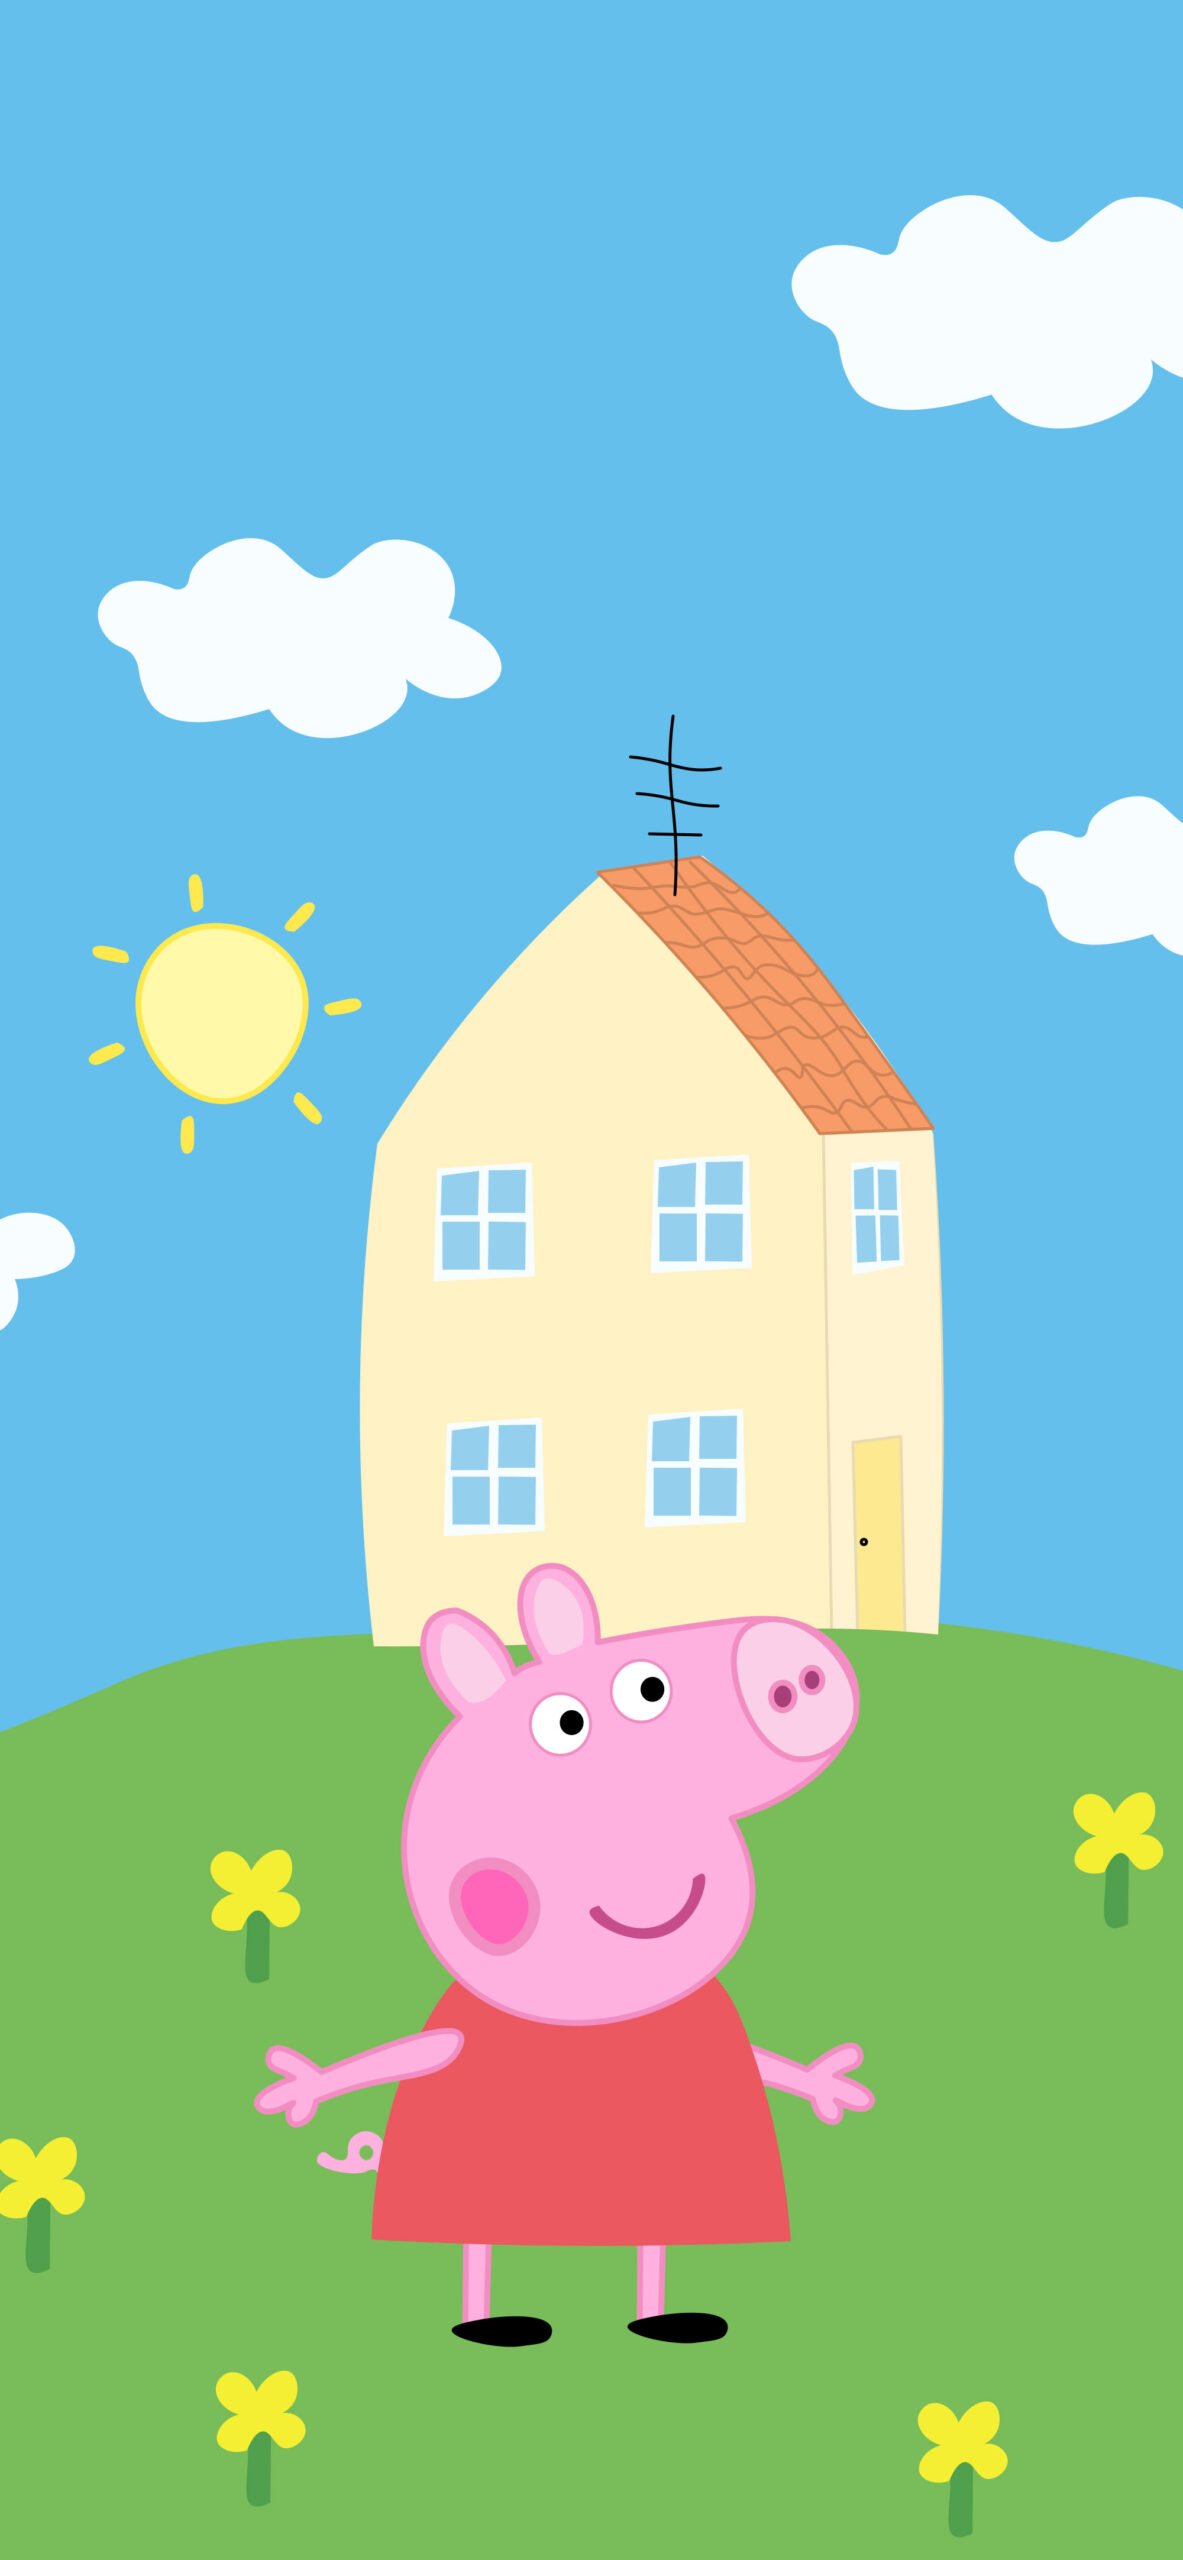 Peppa Pig House Wallpaper for Phone Peppa Pig Wallpaper